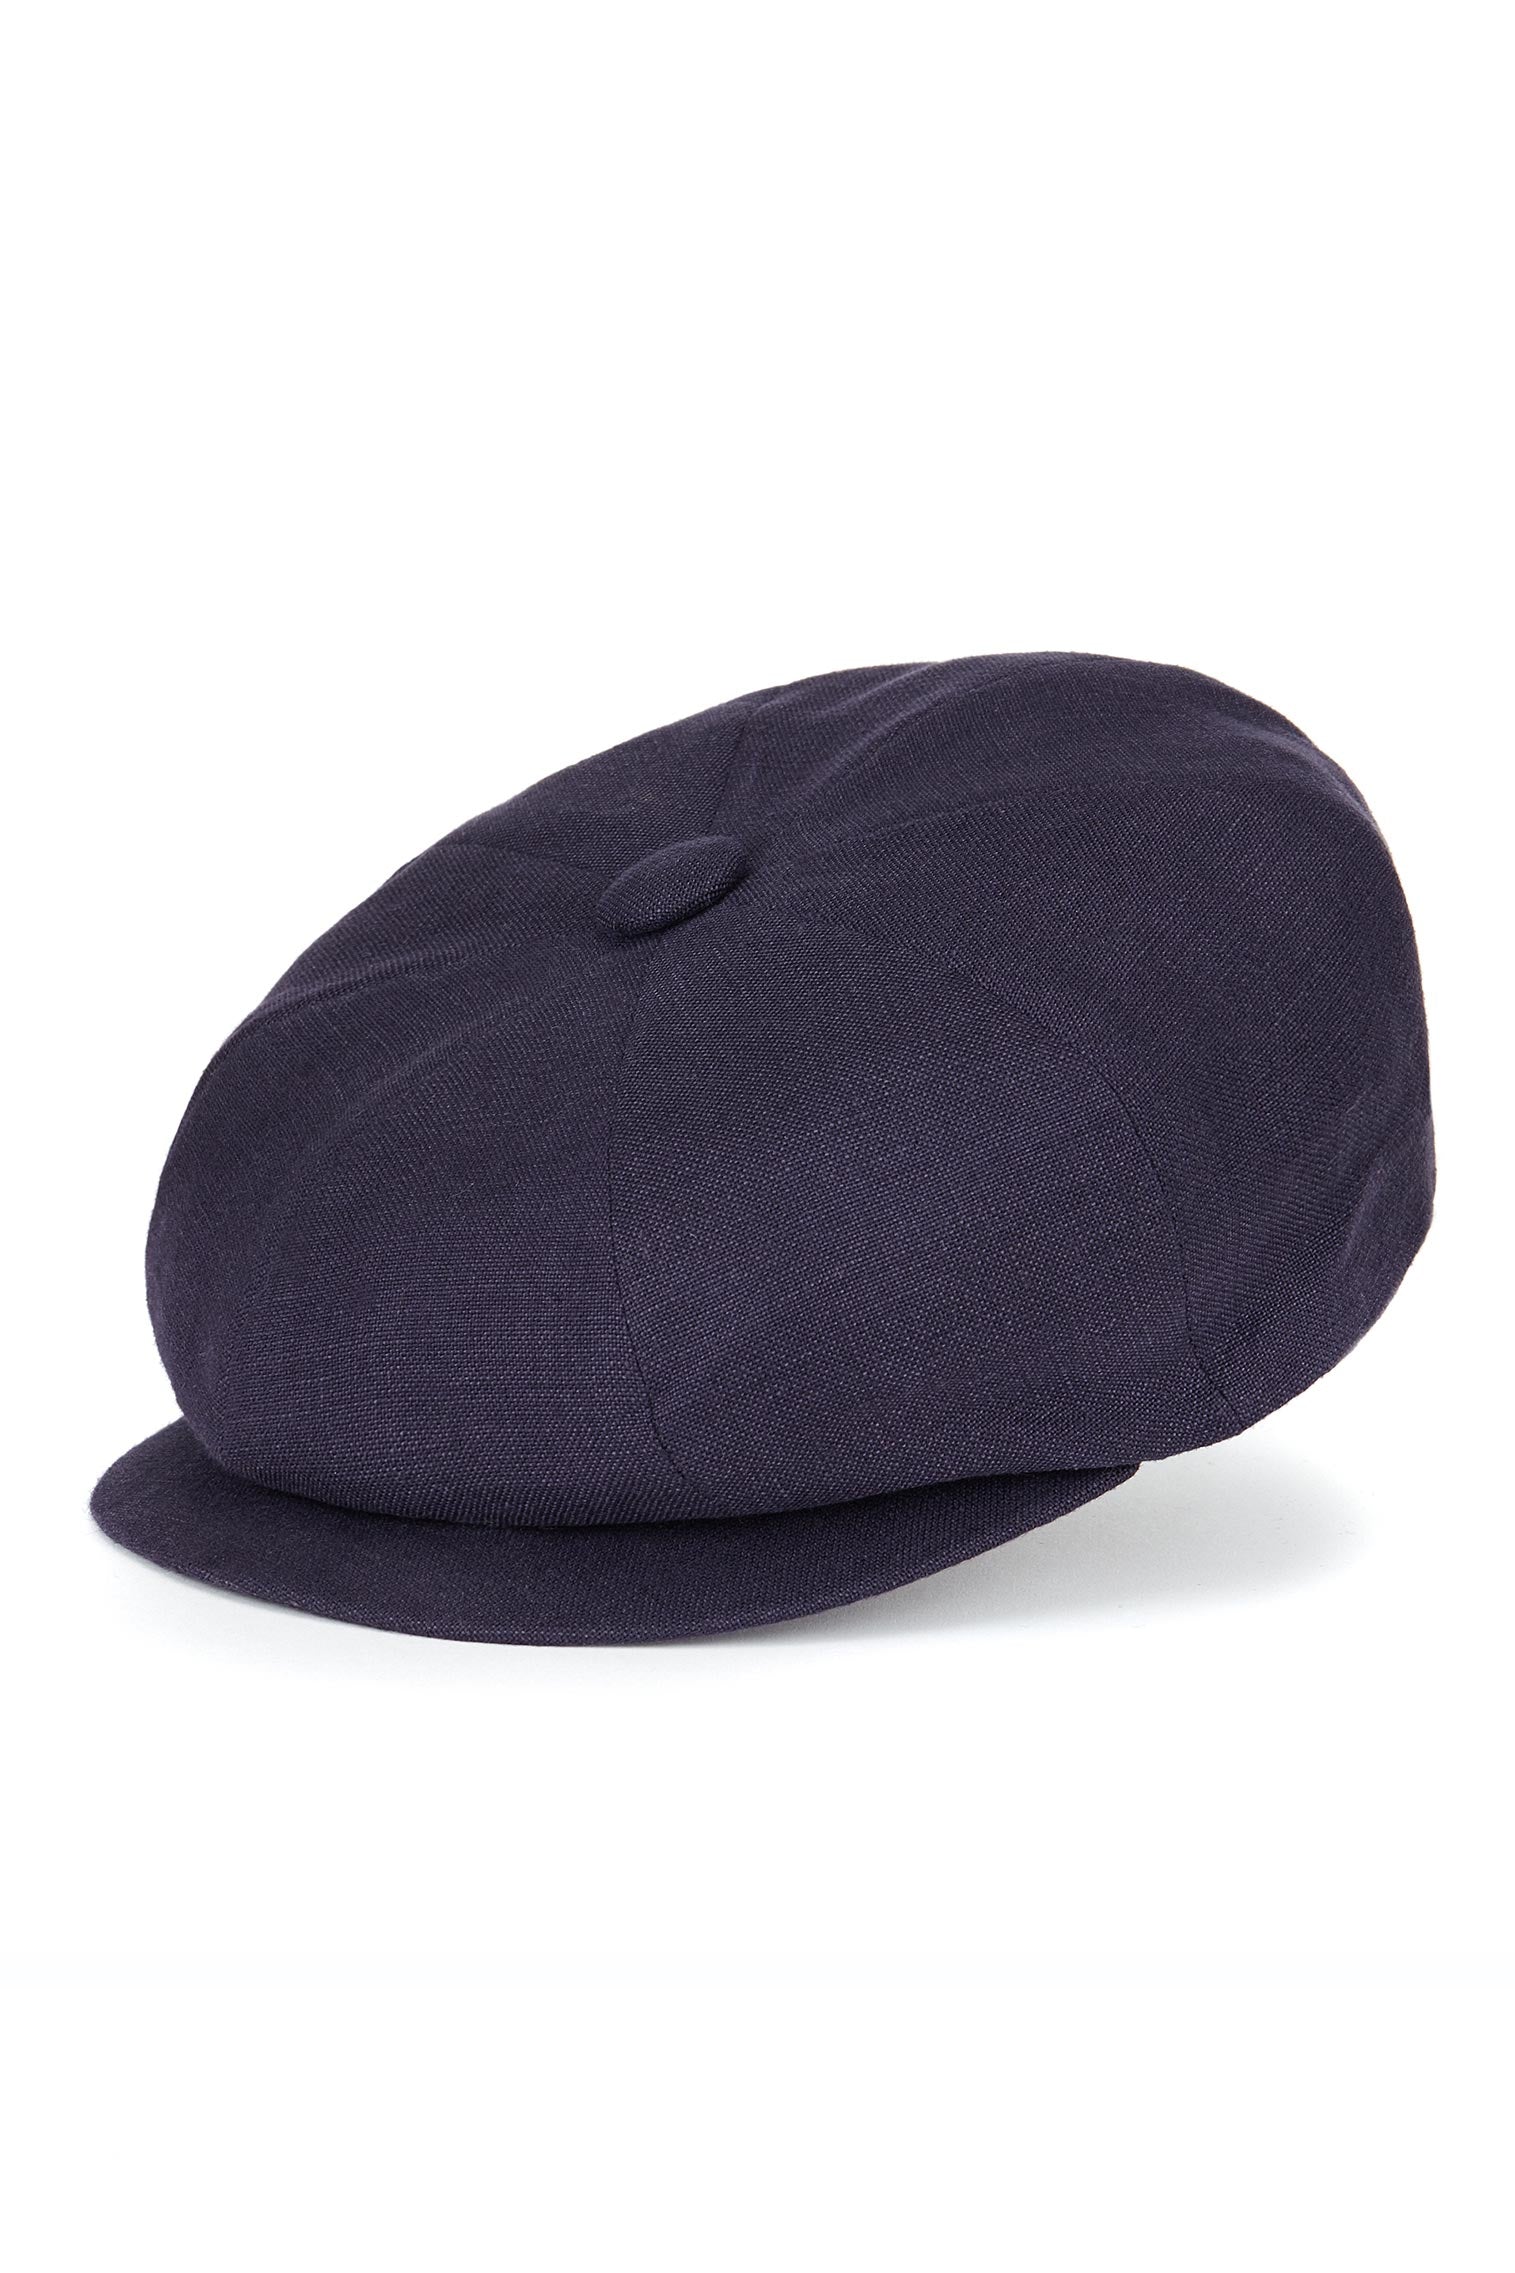 Navy Linen Muirfield Bakerboy Cap - Hats for Tall People - Lock & Co. Hatters London UK